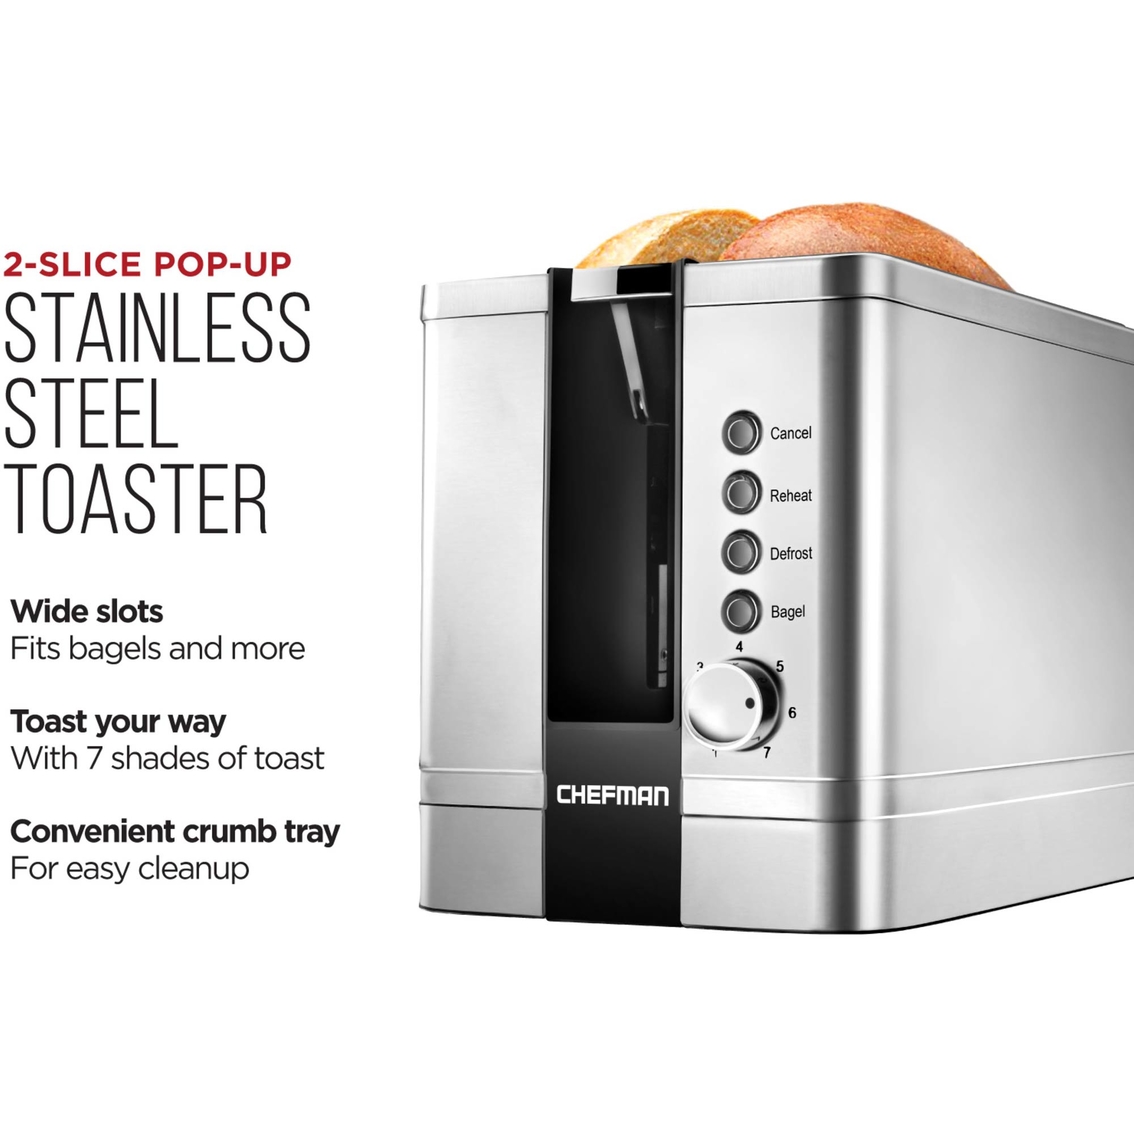 Chefman 2-Slice Pop-up Toaster - Image 6 of 7